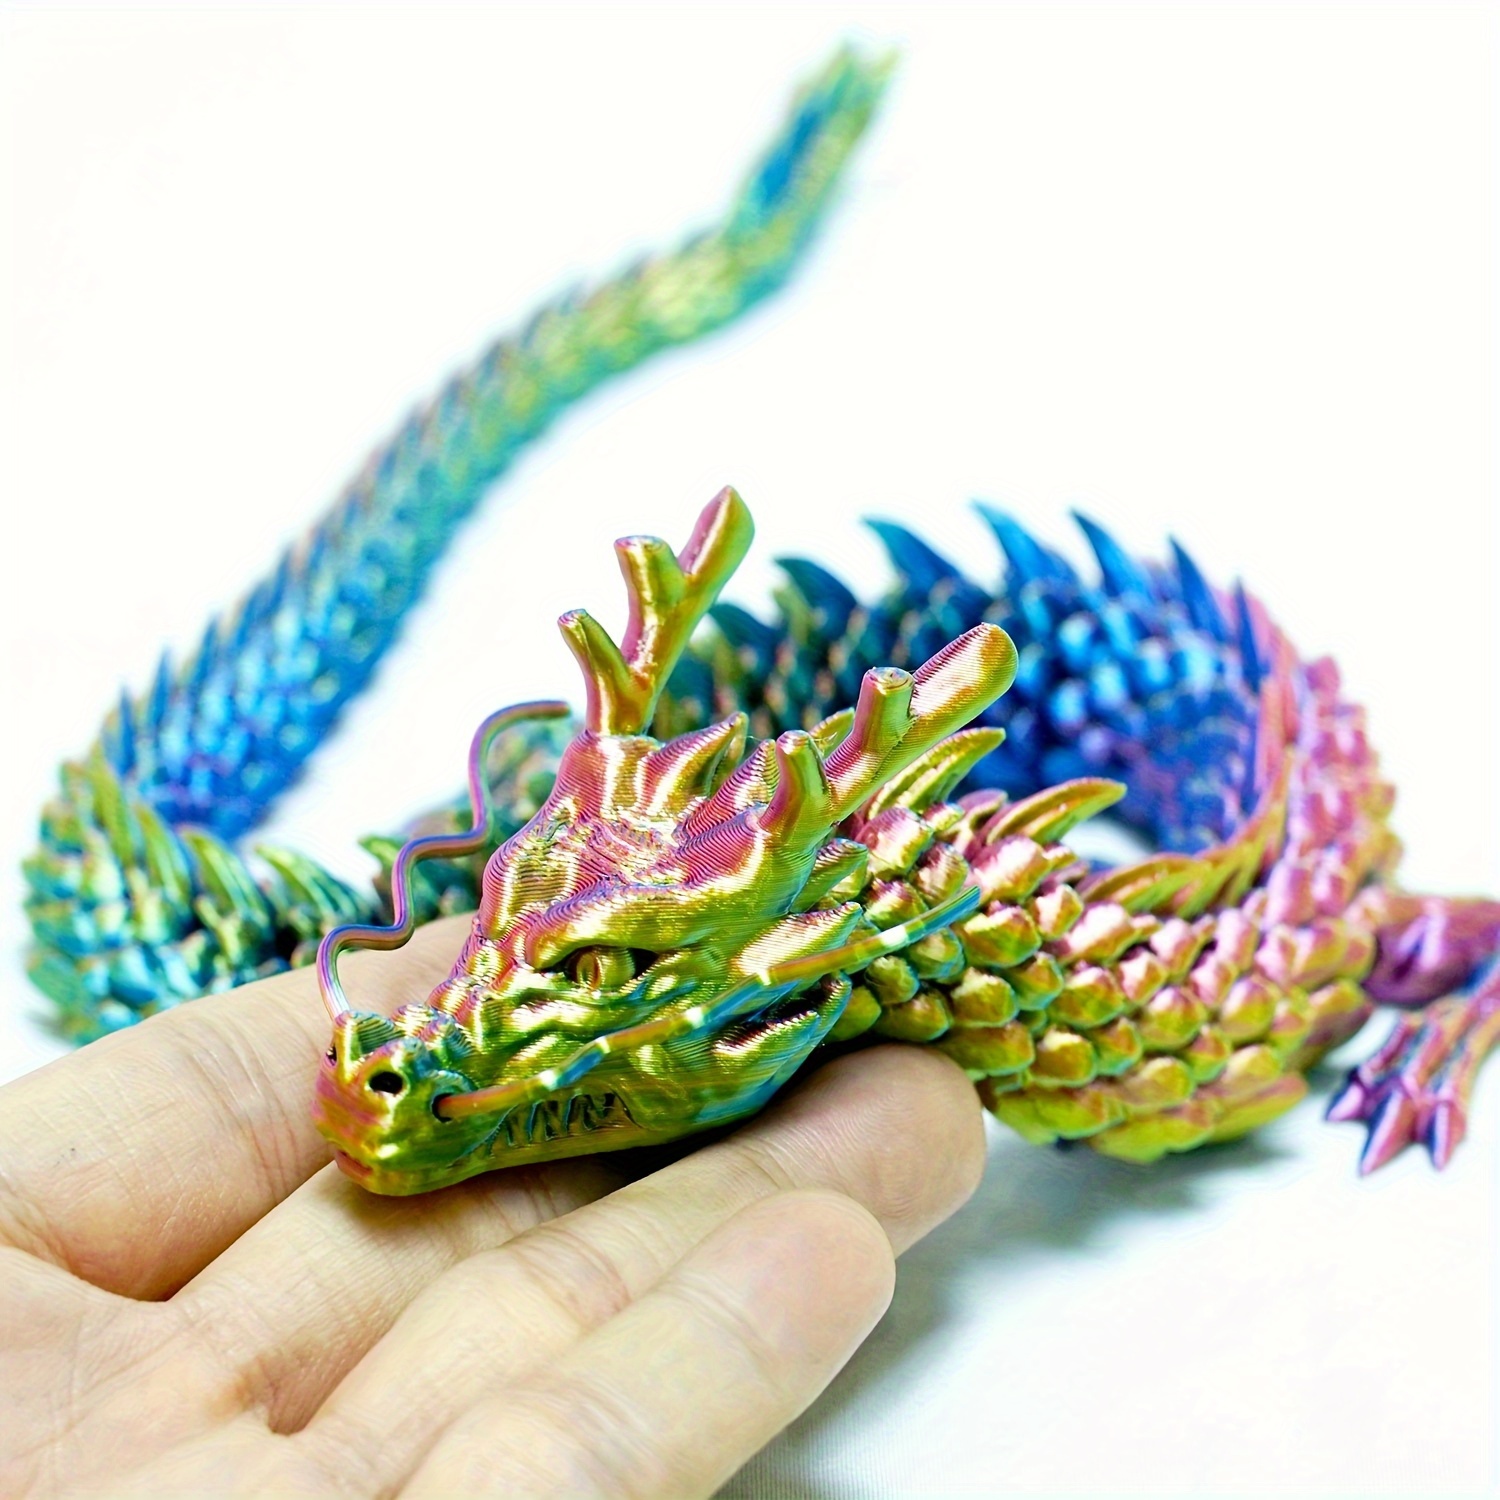 3D Printed Articulated Dragon Egg and Hatchling – Leaf